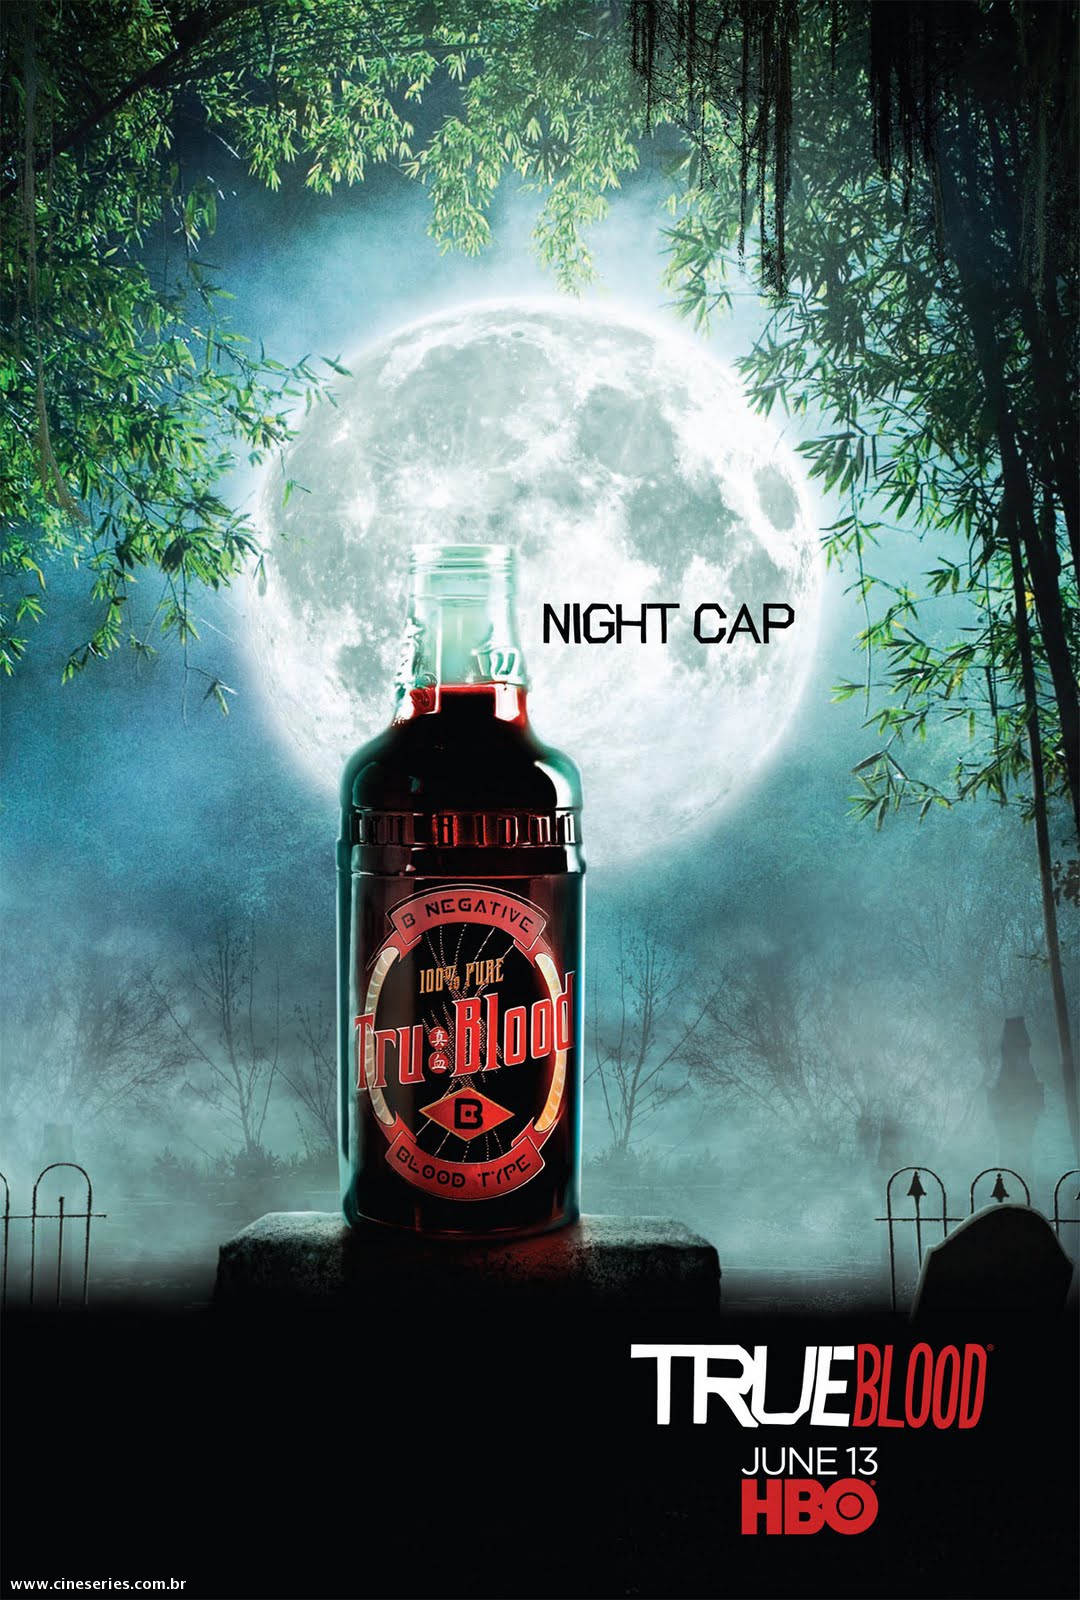 Poster_True_BLood_Night_cap